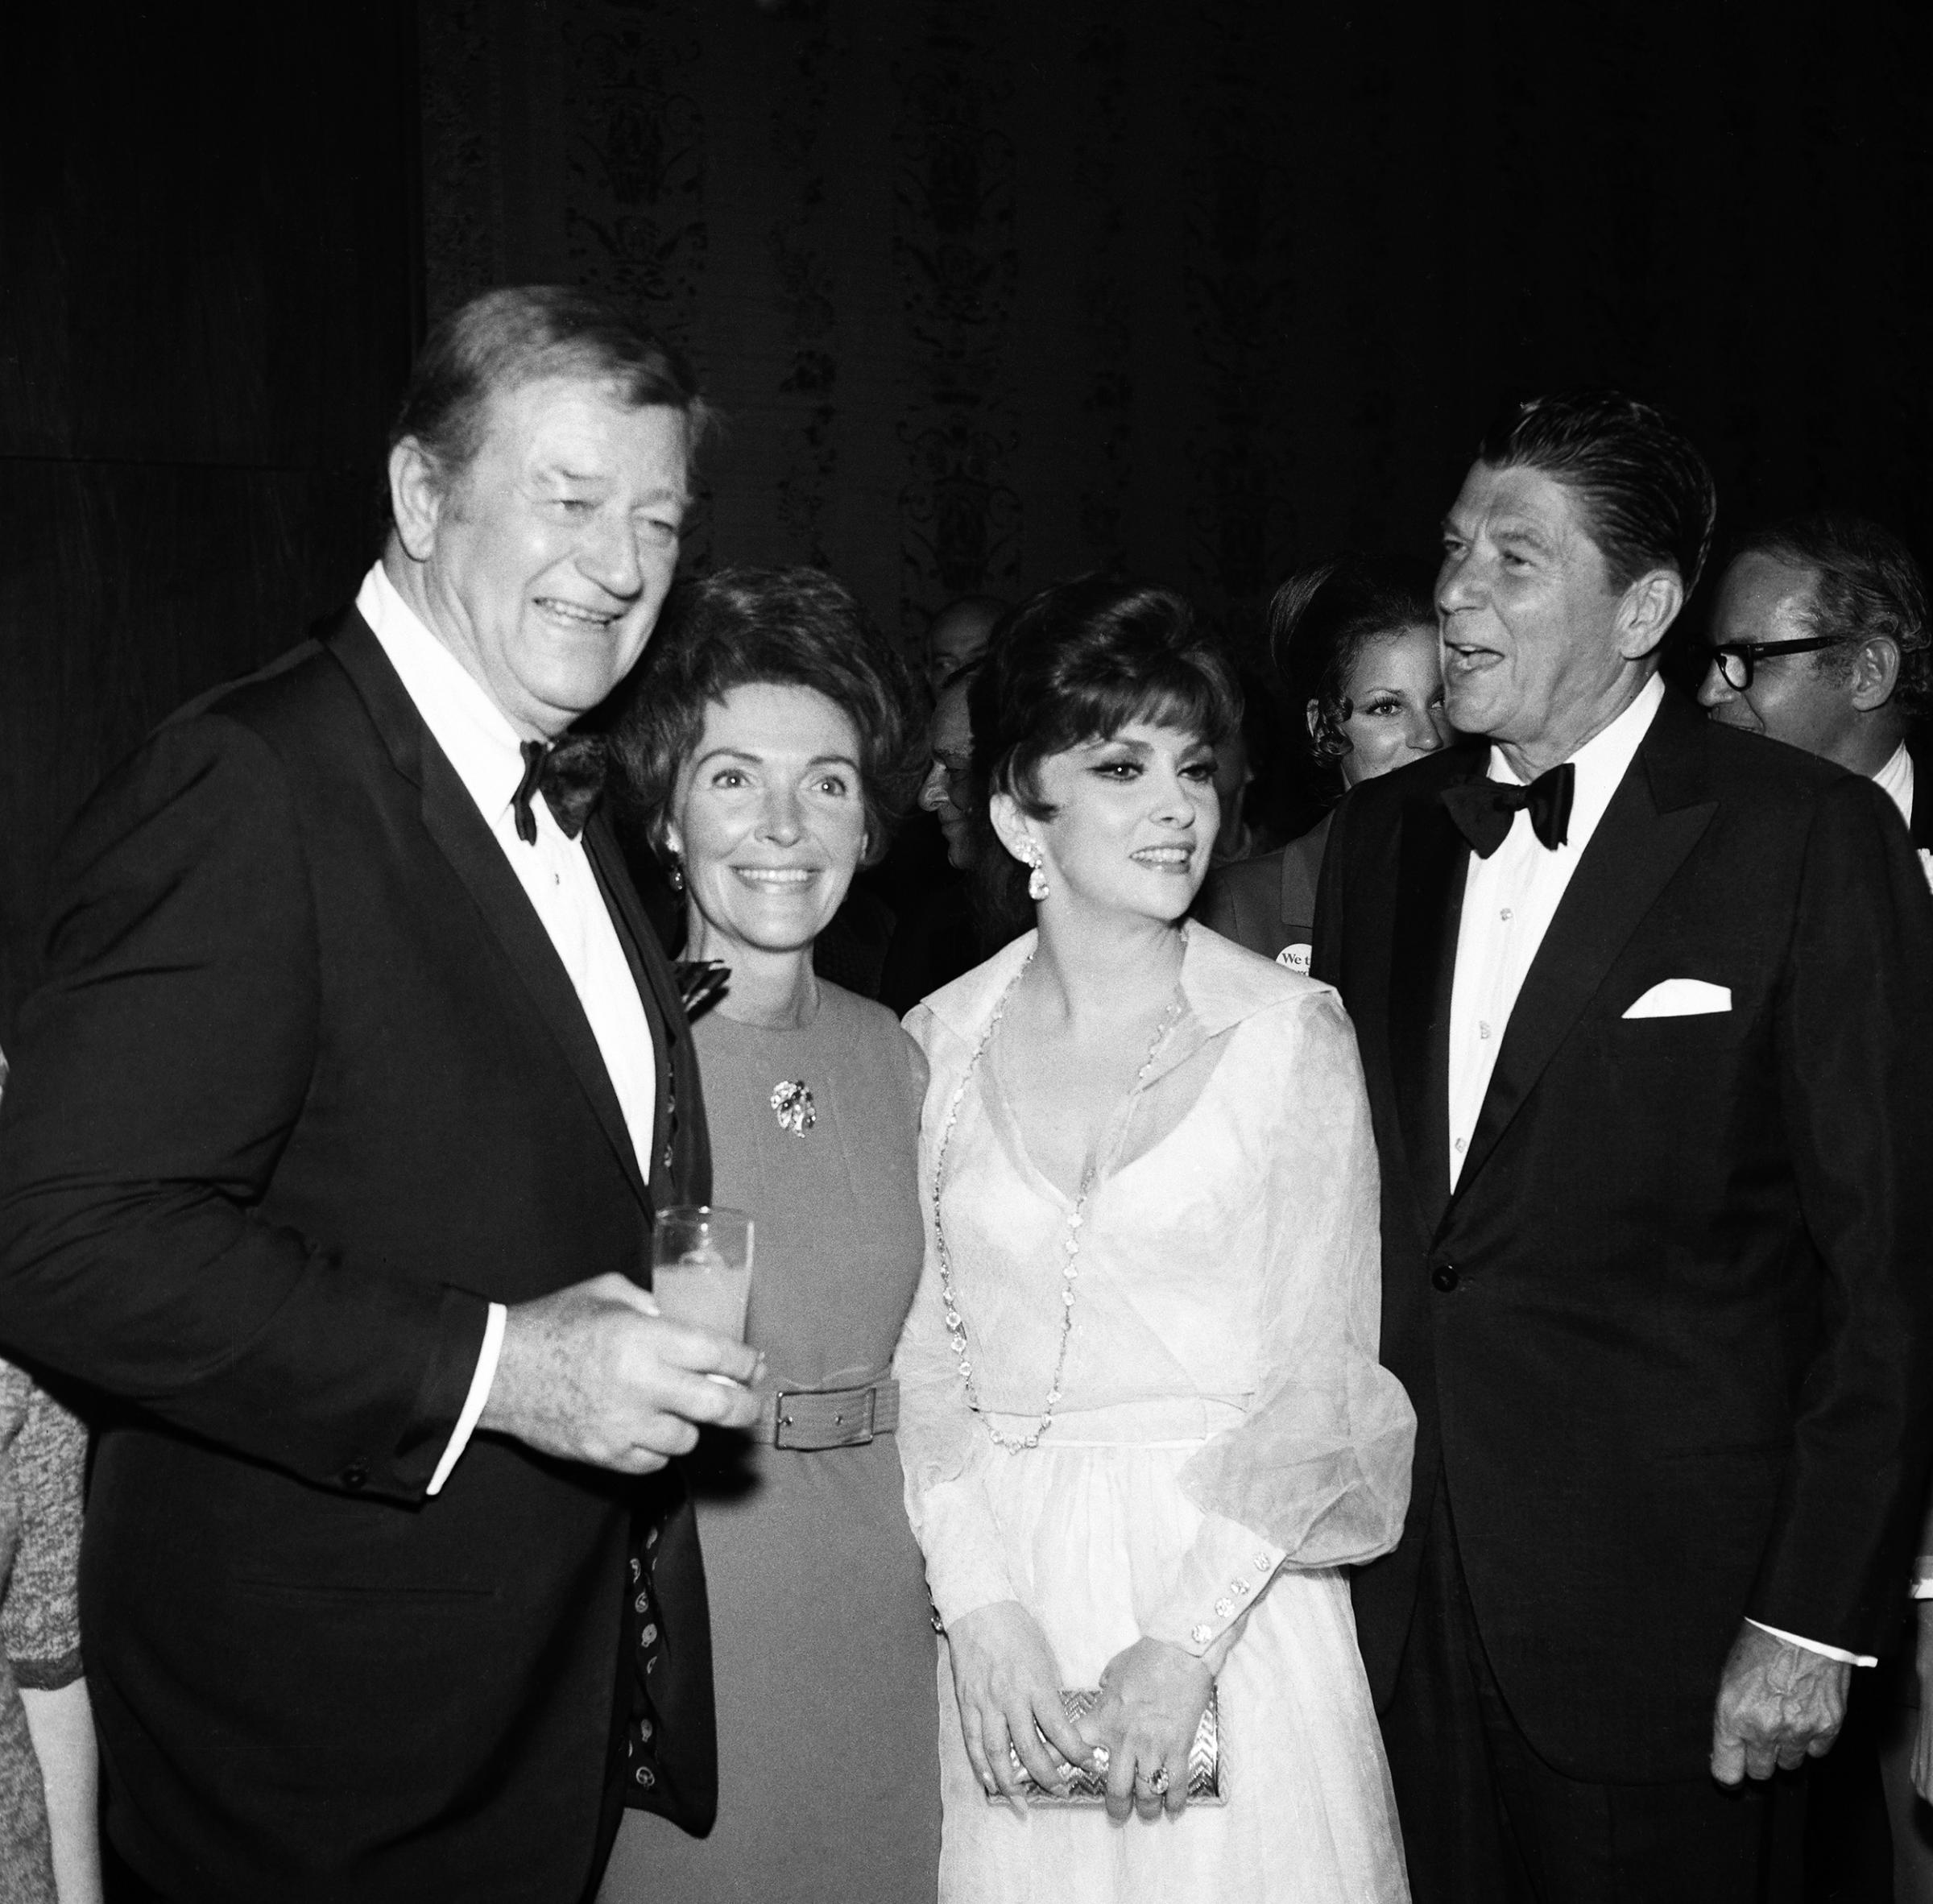 John Wayne, Nancy Reagan, Gina Lollobrigida and Ronald Reagan during the National Headliner Awards in in June 1970.